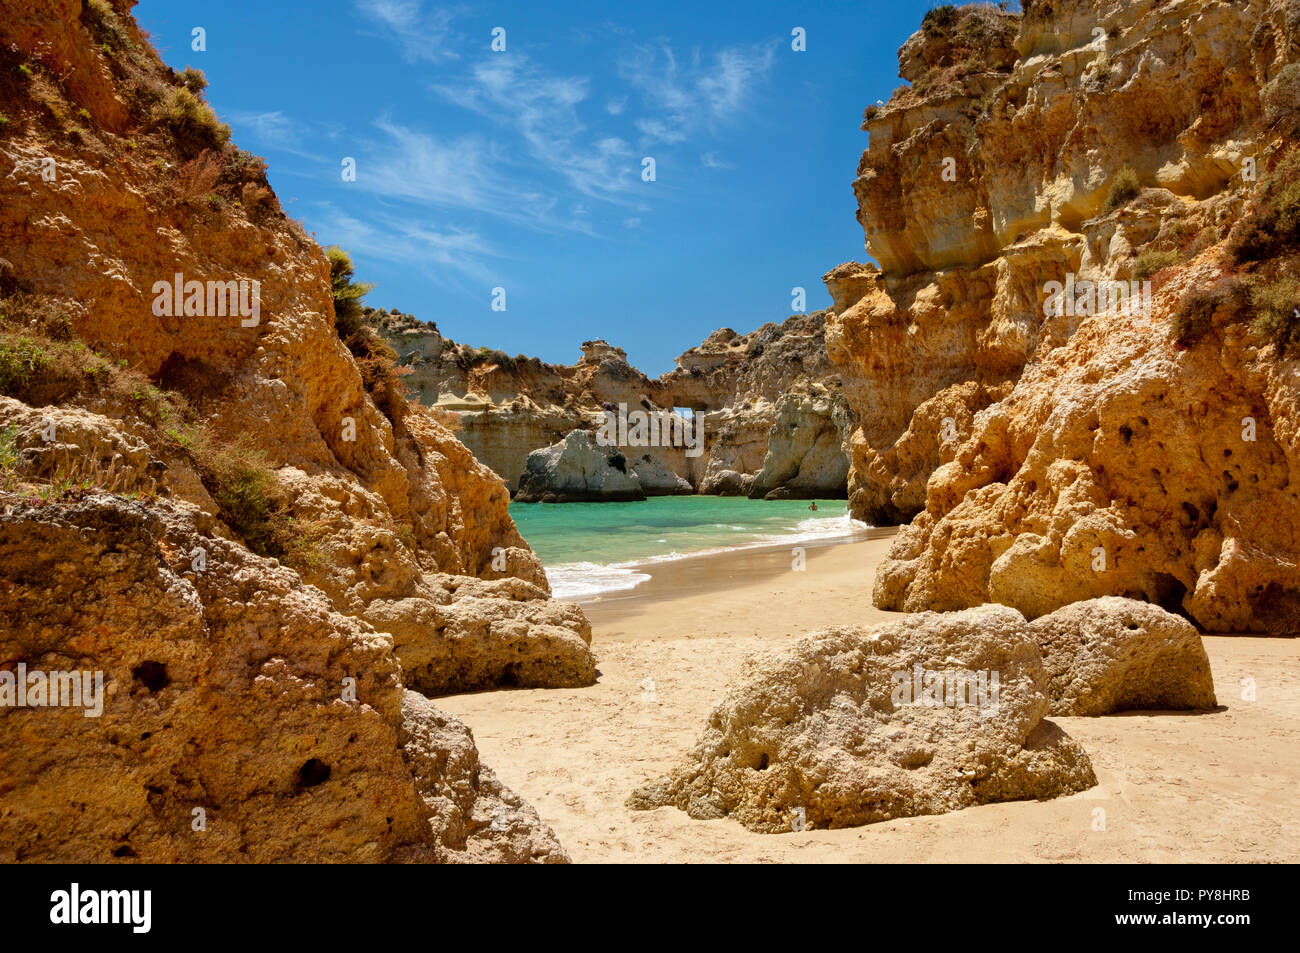 Praia dos Tres Irmaos, Alvor, the Algarve, Portugal Stock Photo